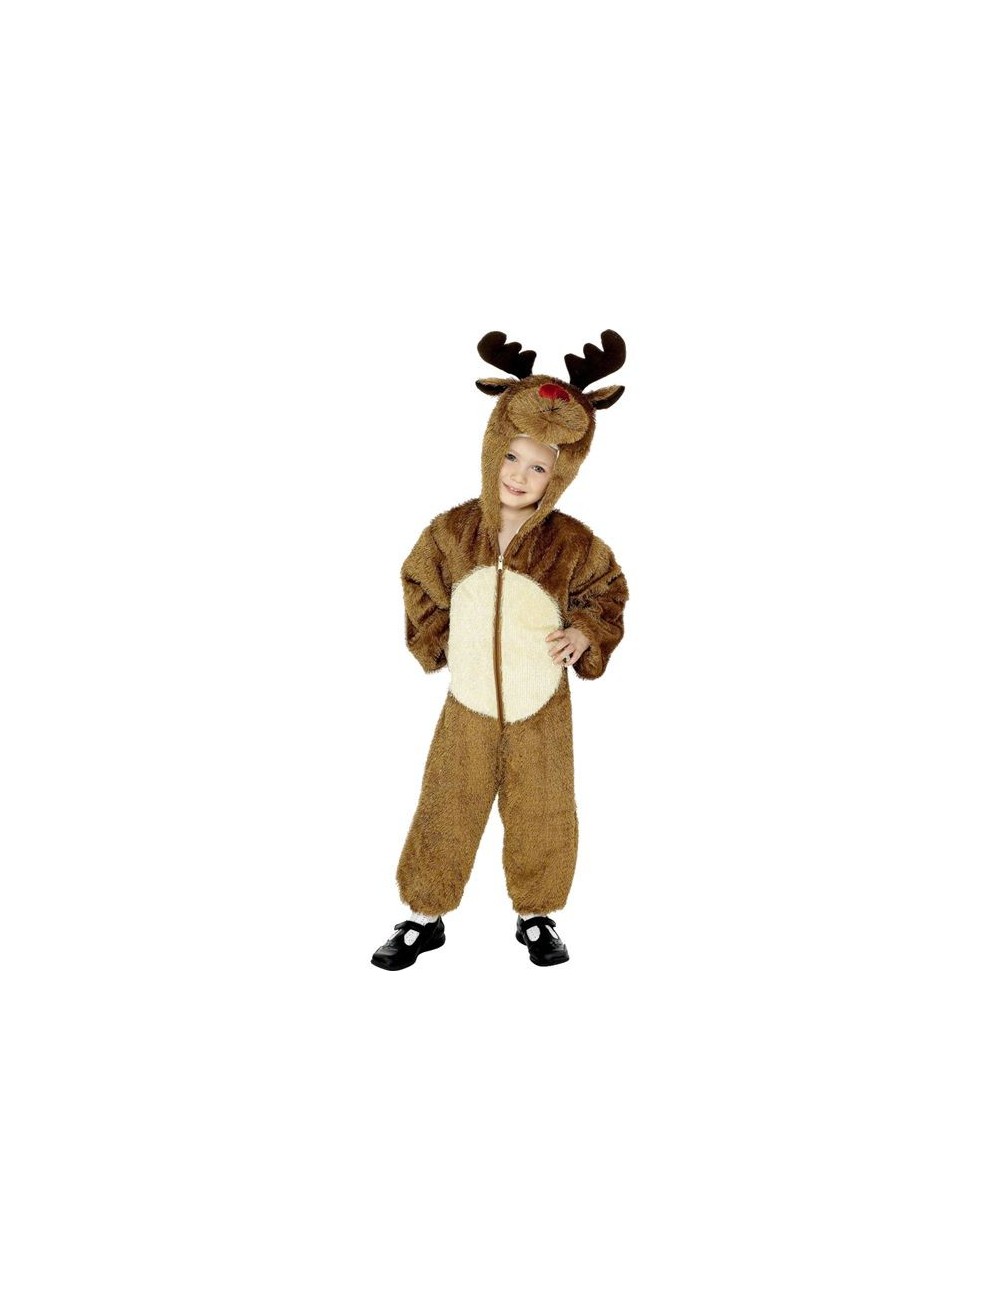 Reindeer plush costume for kids